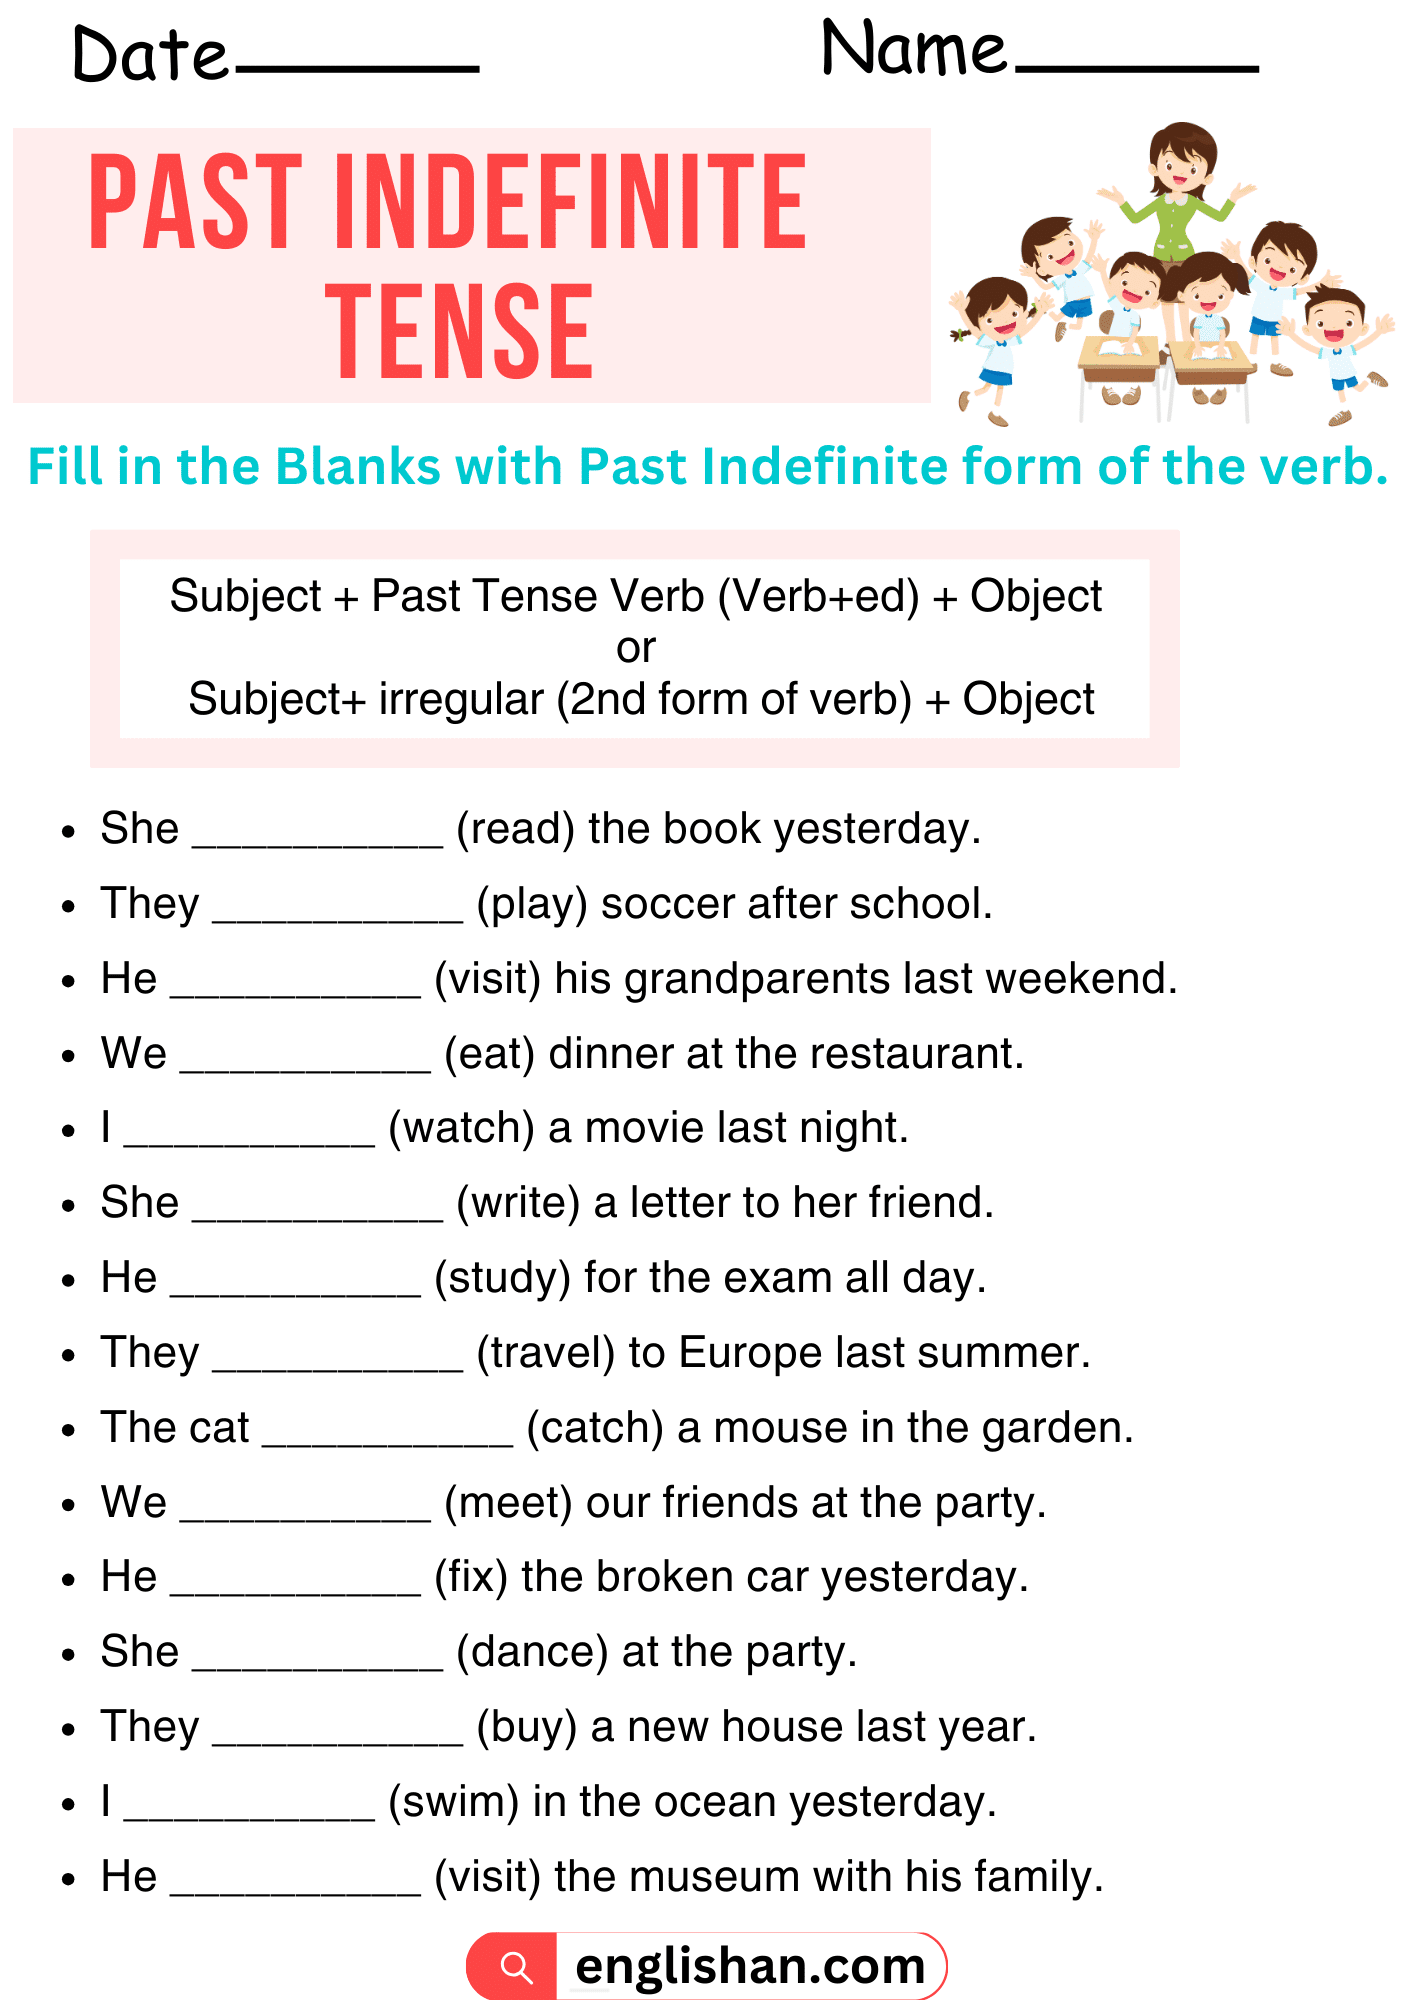 15+Sentences of Present Indefinite Tense Worksheet. How to use Present Indefinite Tense in Sentences.